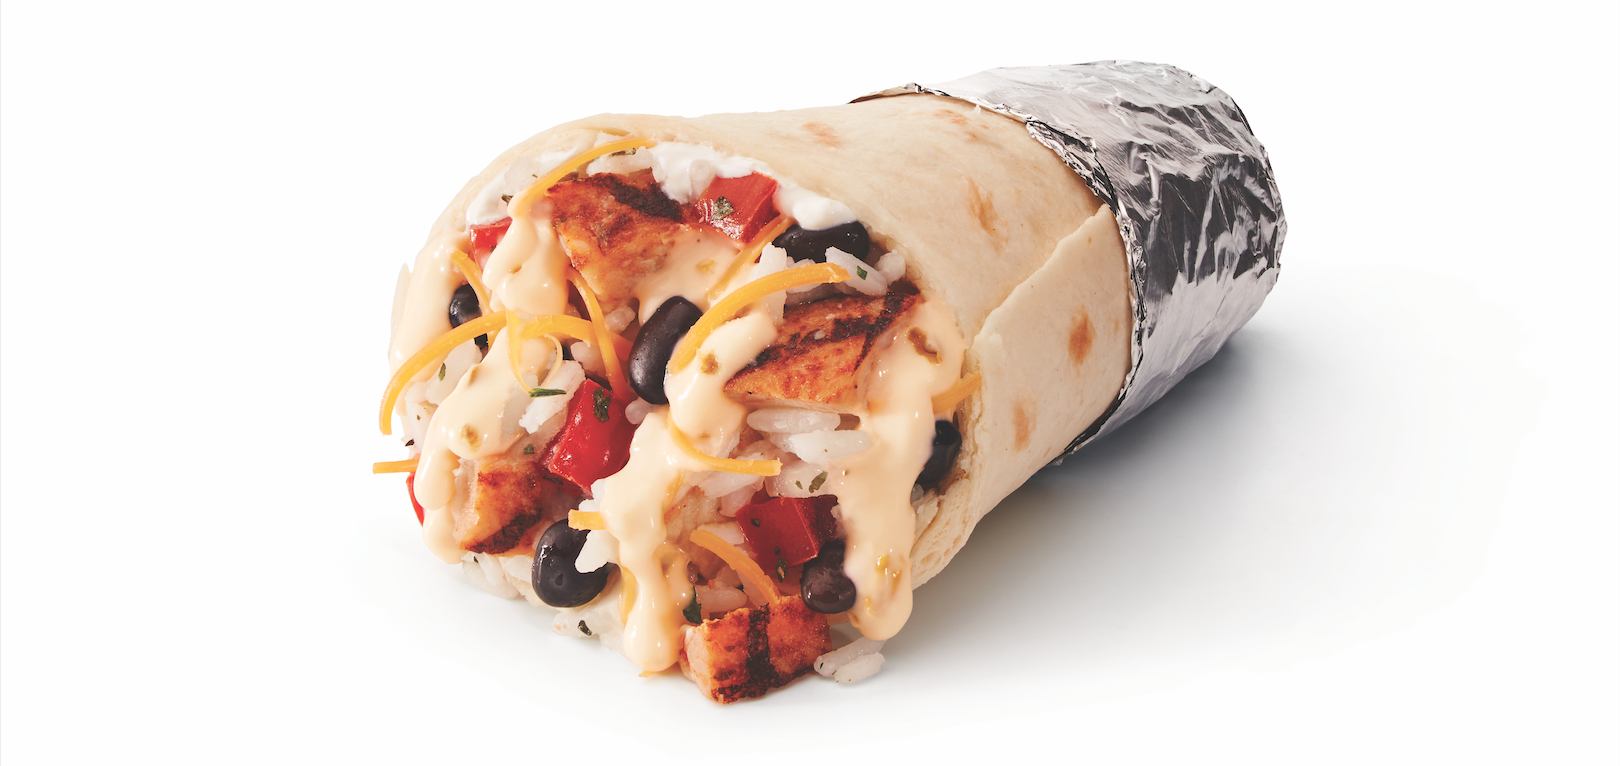 Taco John's Queso Blanco Boss Burrito with Chicken & Corn and Pepper Salsa Nutrition Facts